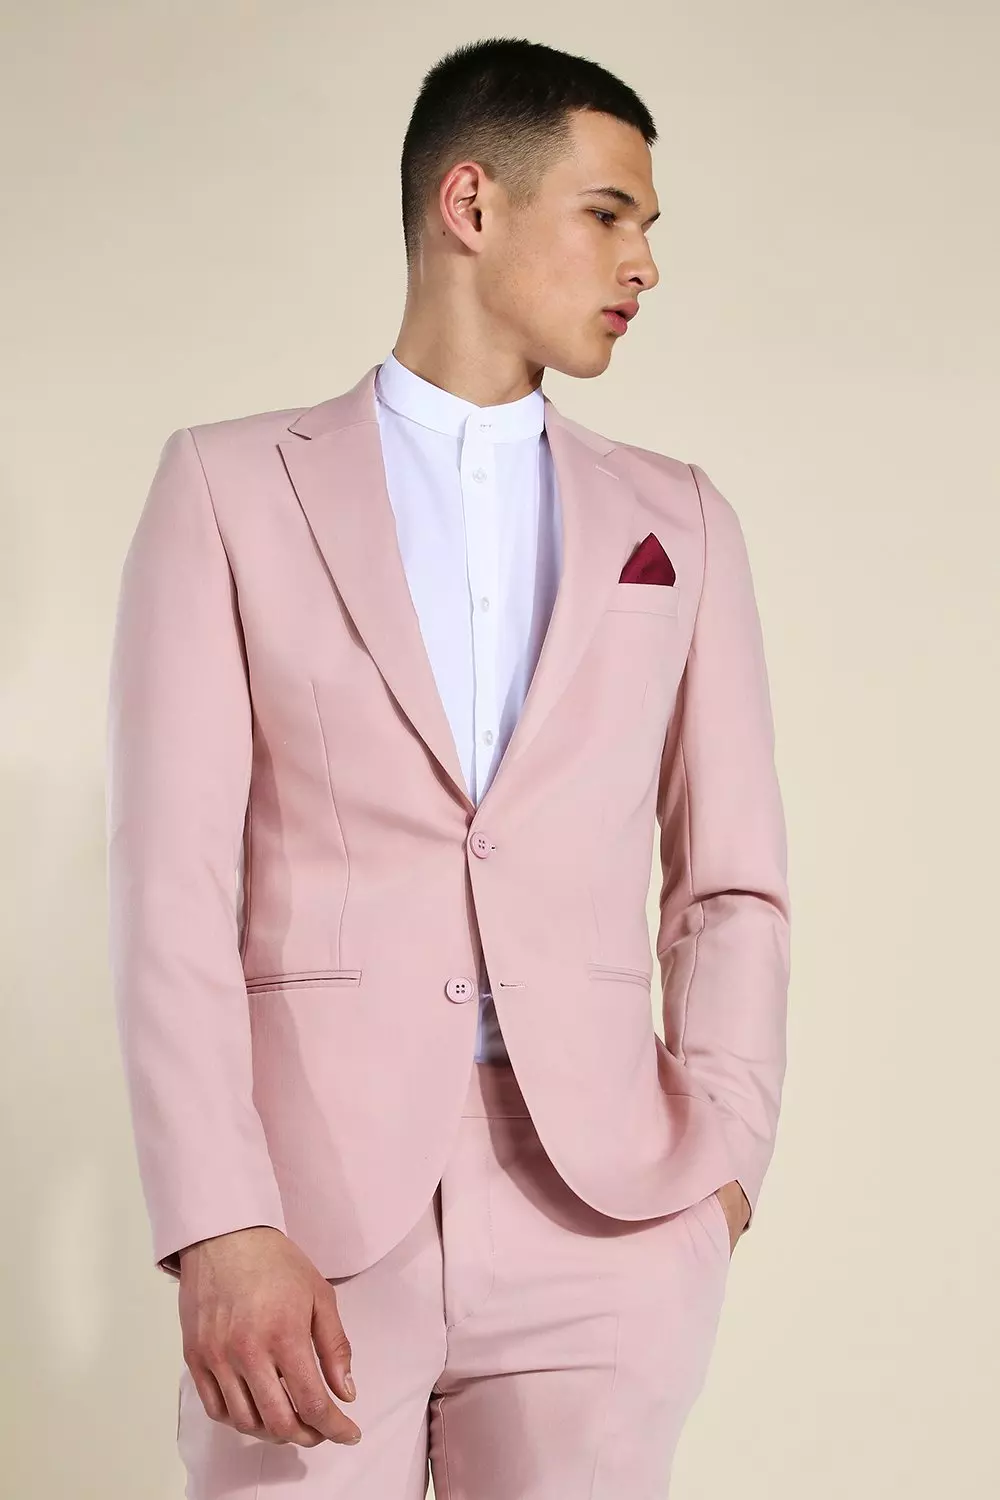 white and light pink tuxedo